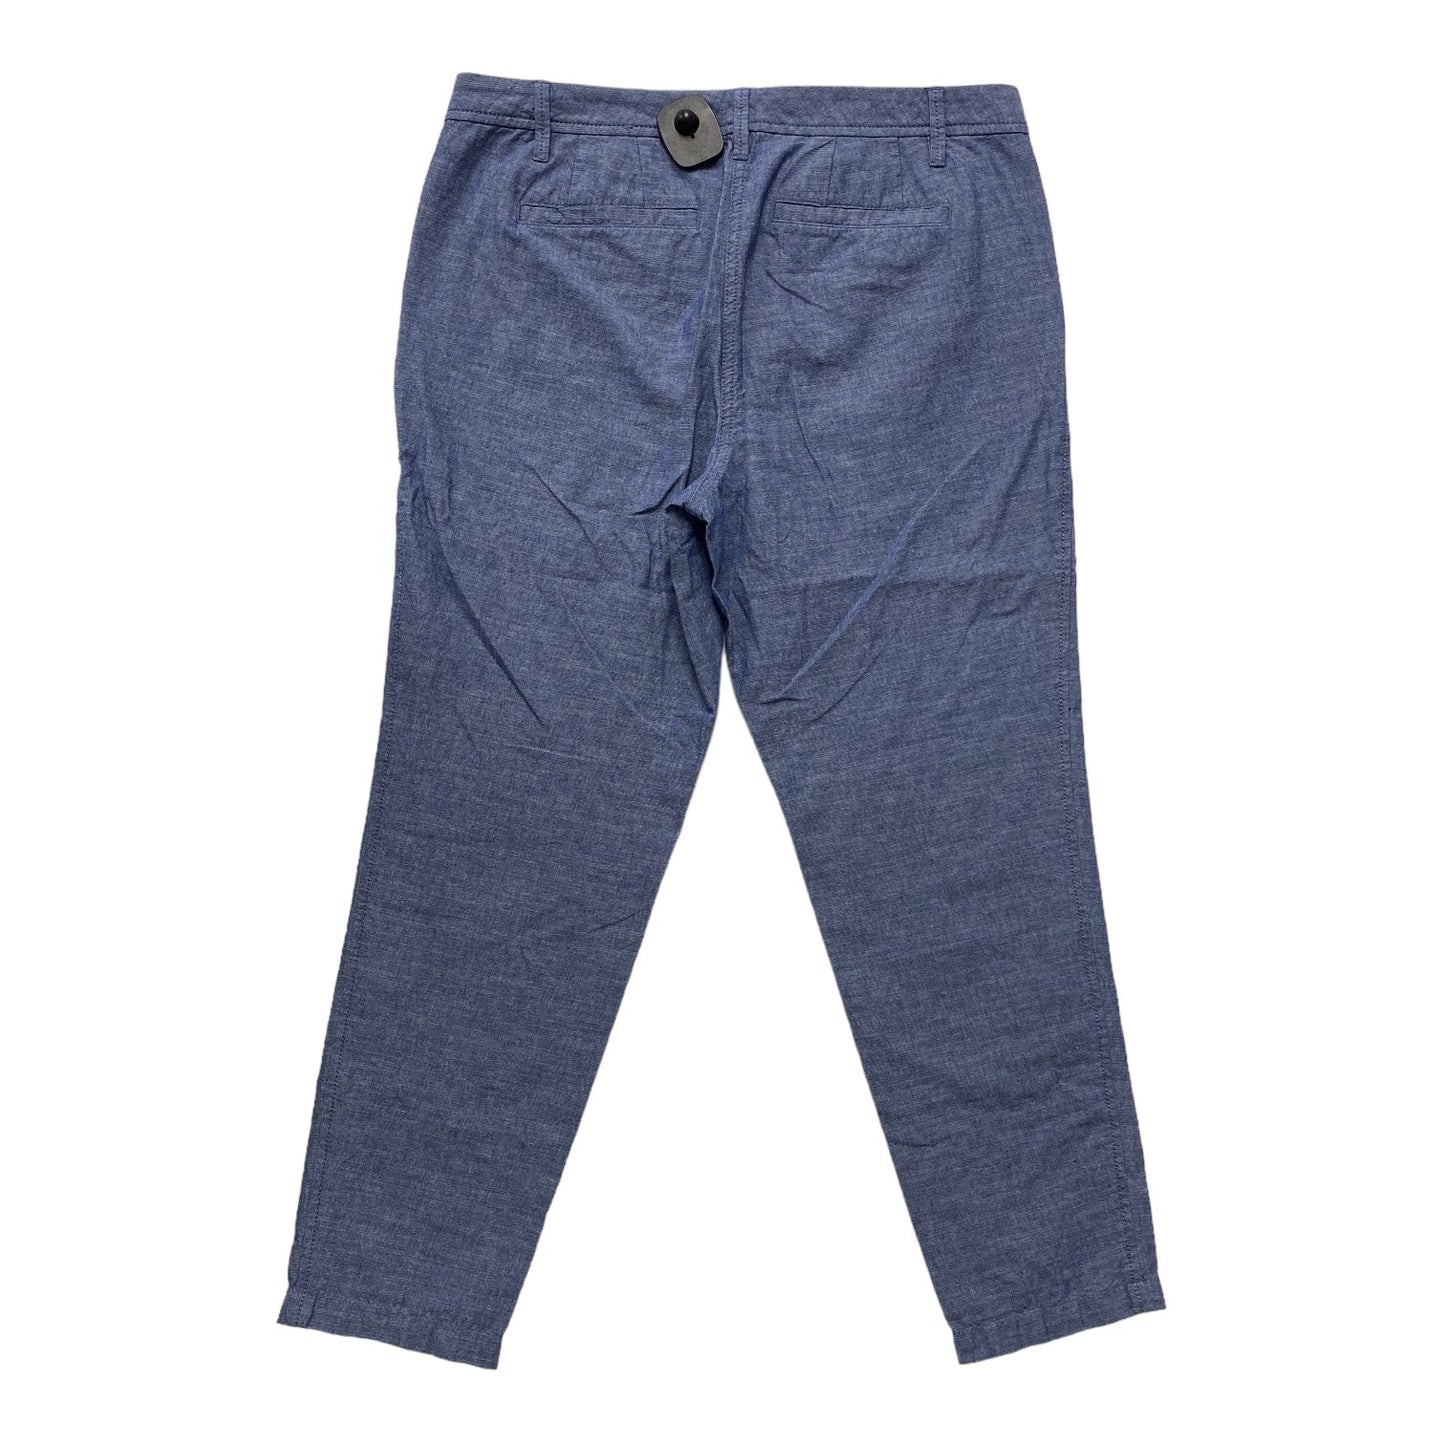 Blue Pants Cropped Talbots, Size 8